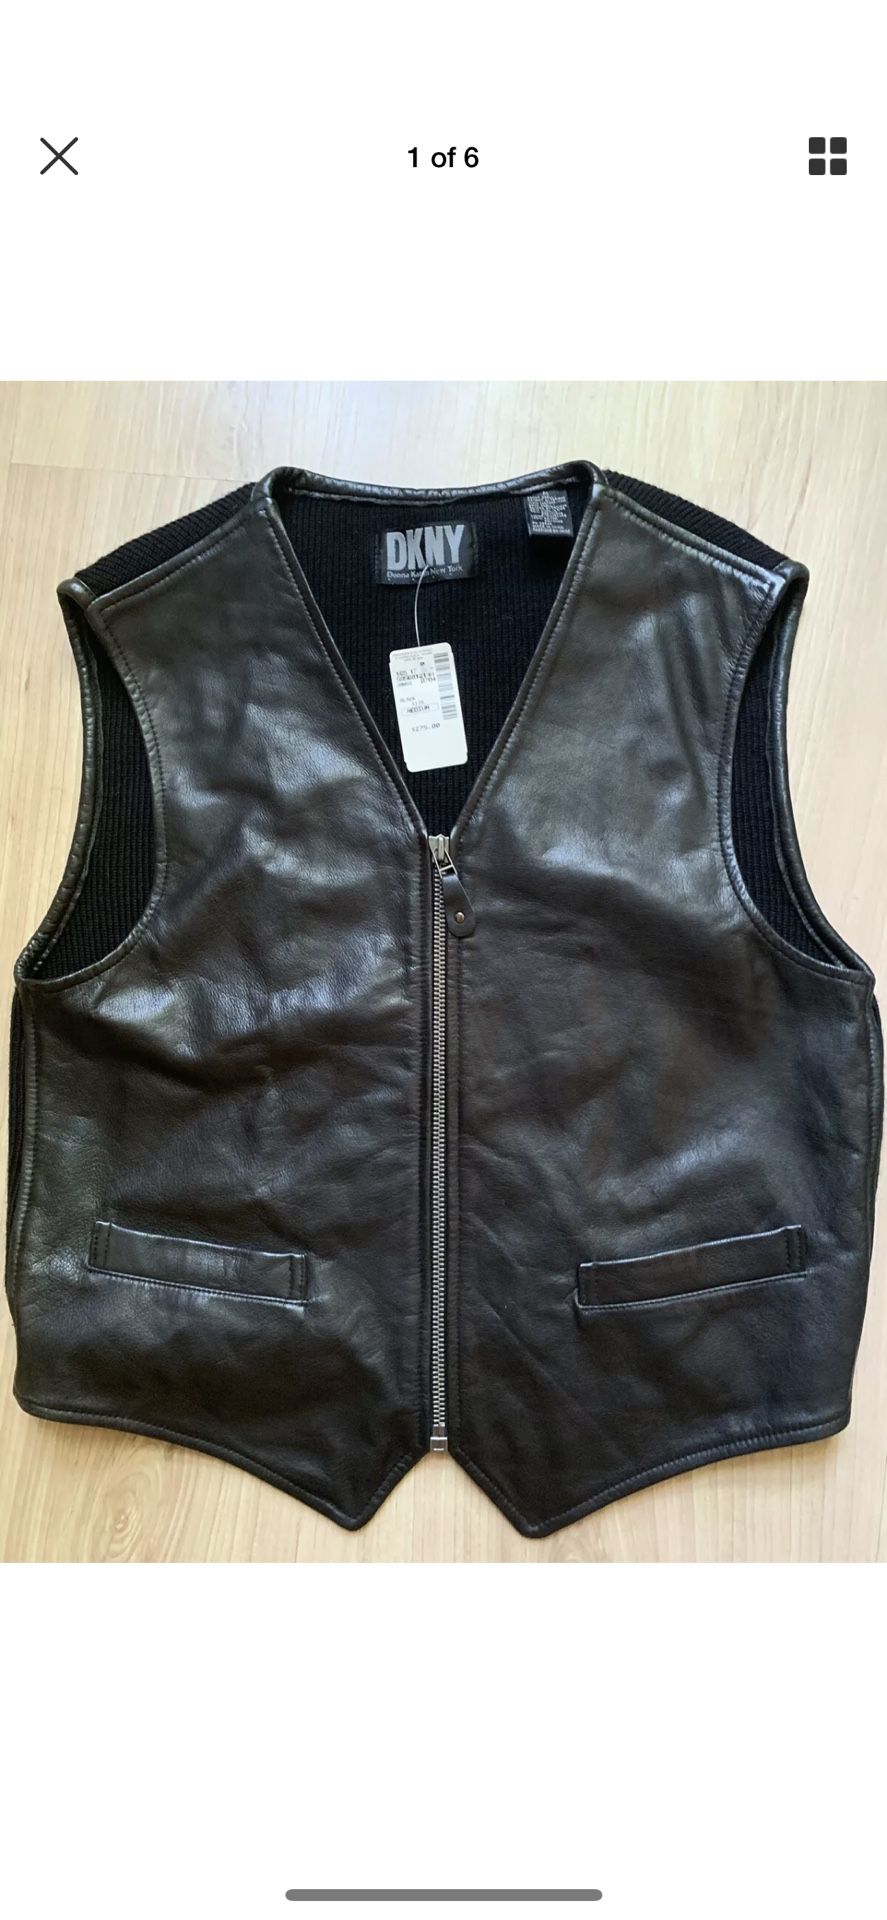 DKNY Women’s medium brand new leather vest 275.00 value